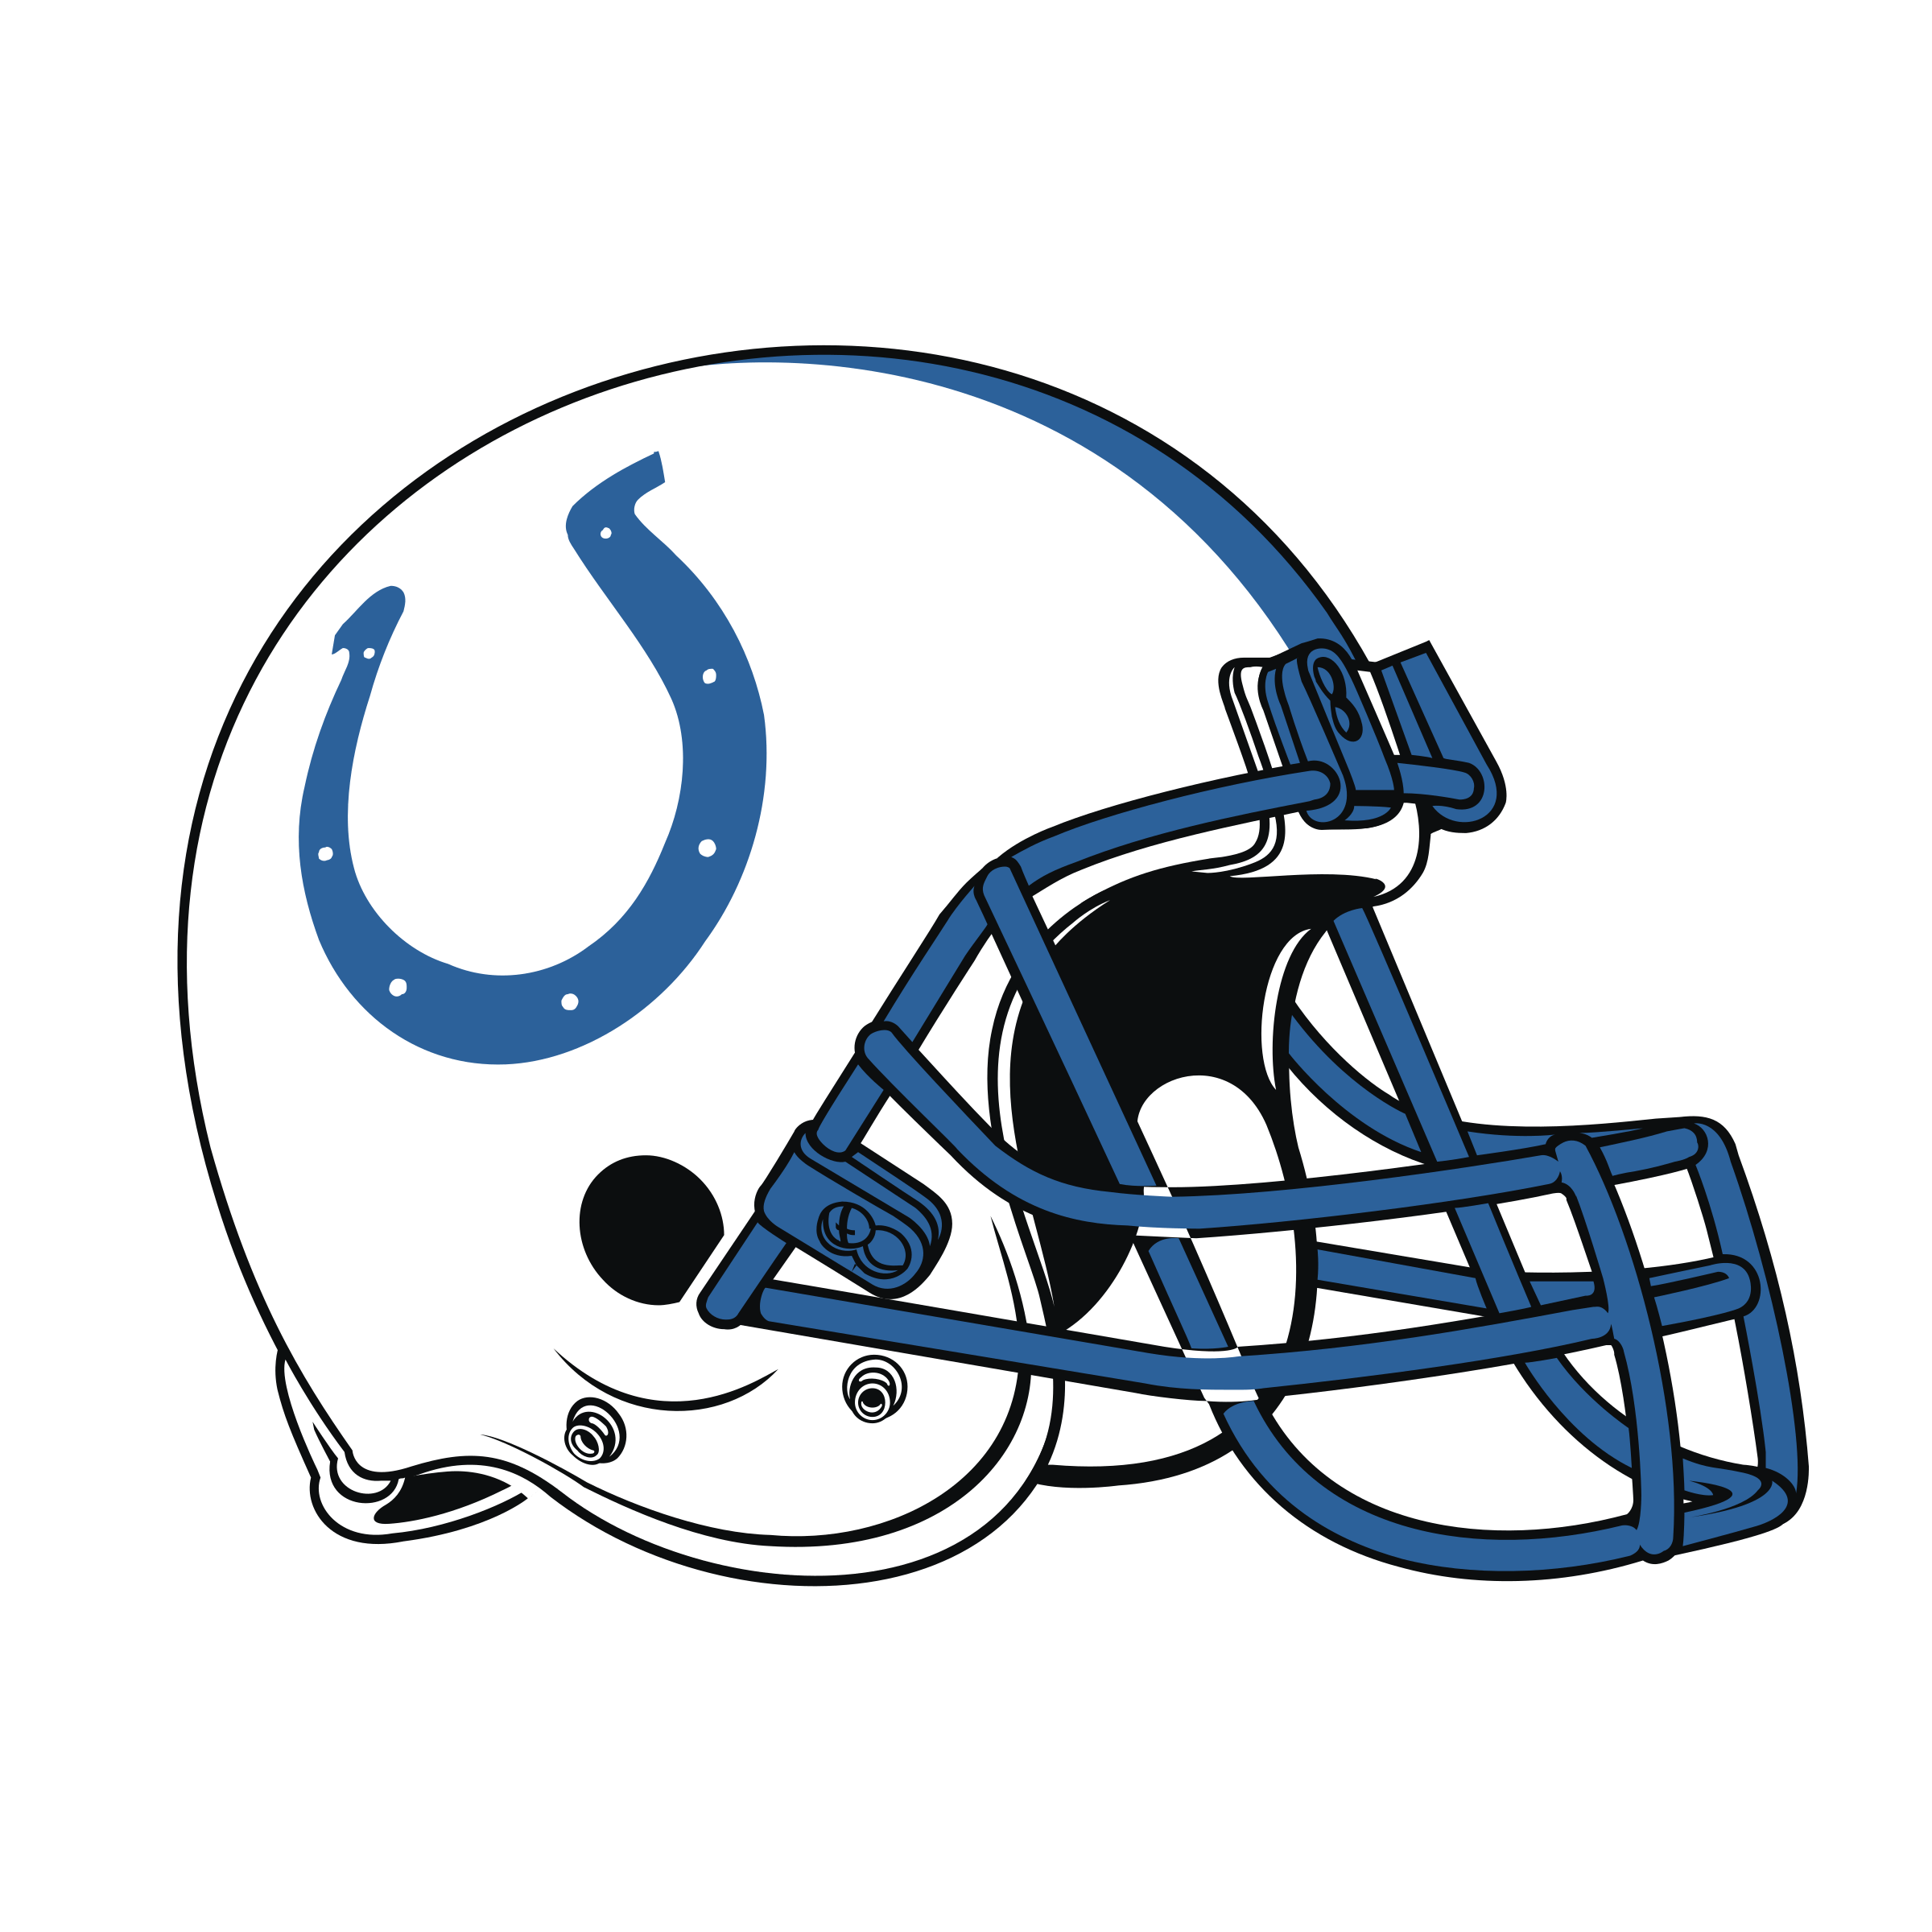 Colts Logo - Indianapolis Colts Logo SVG Vector & PNG Transparent - Vector Logo ...